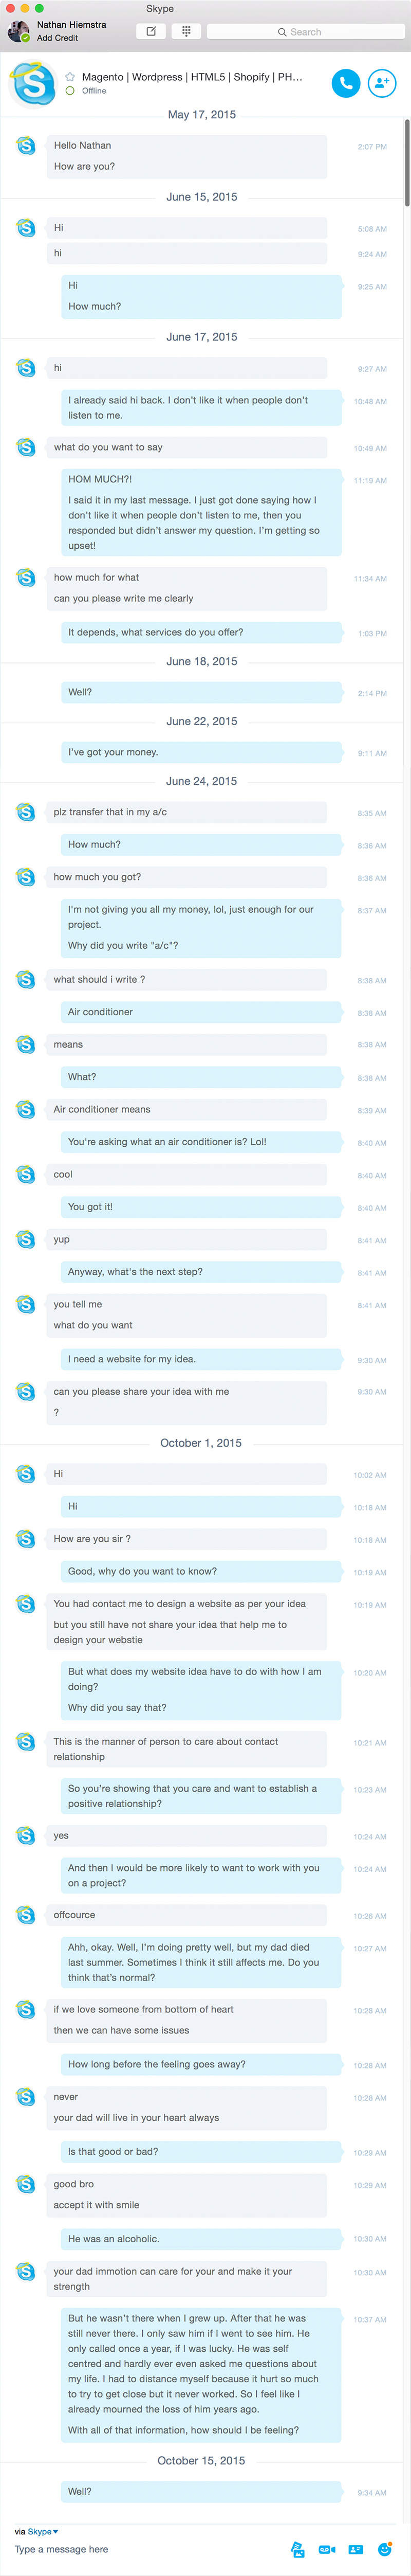 Skype - Magneto Website Project Conversation